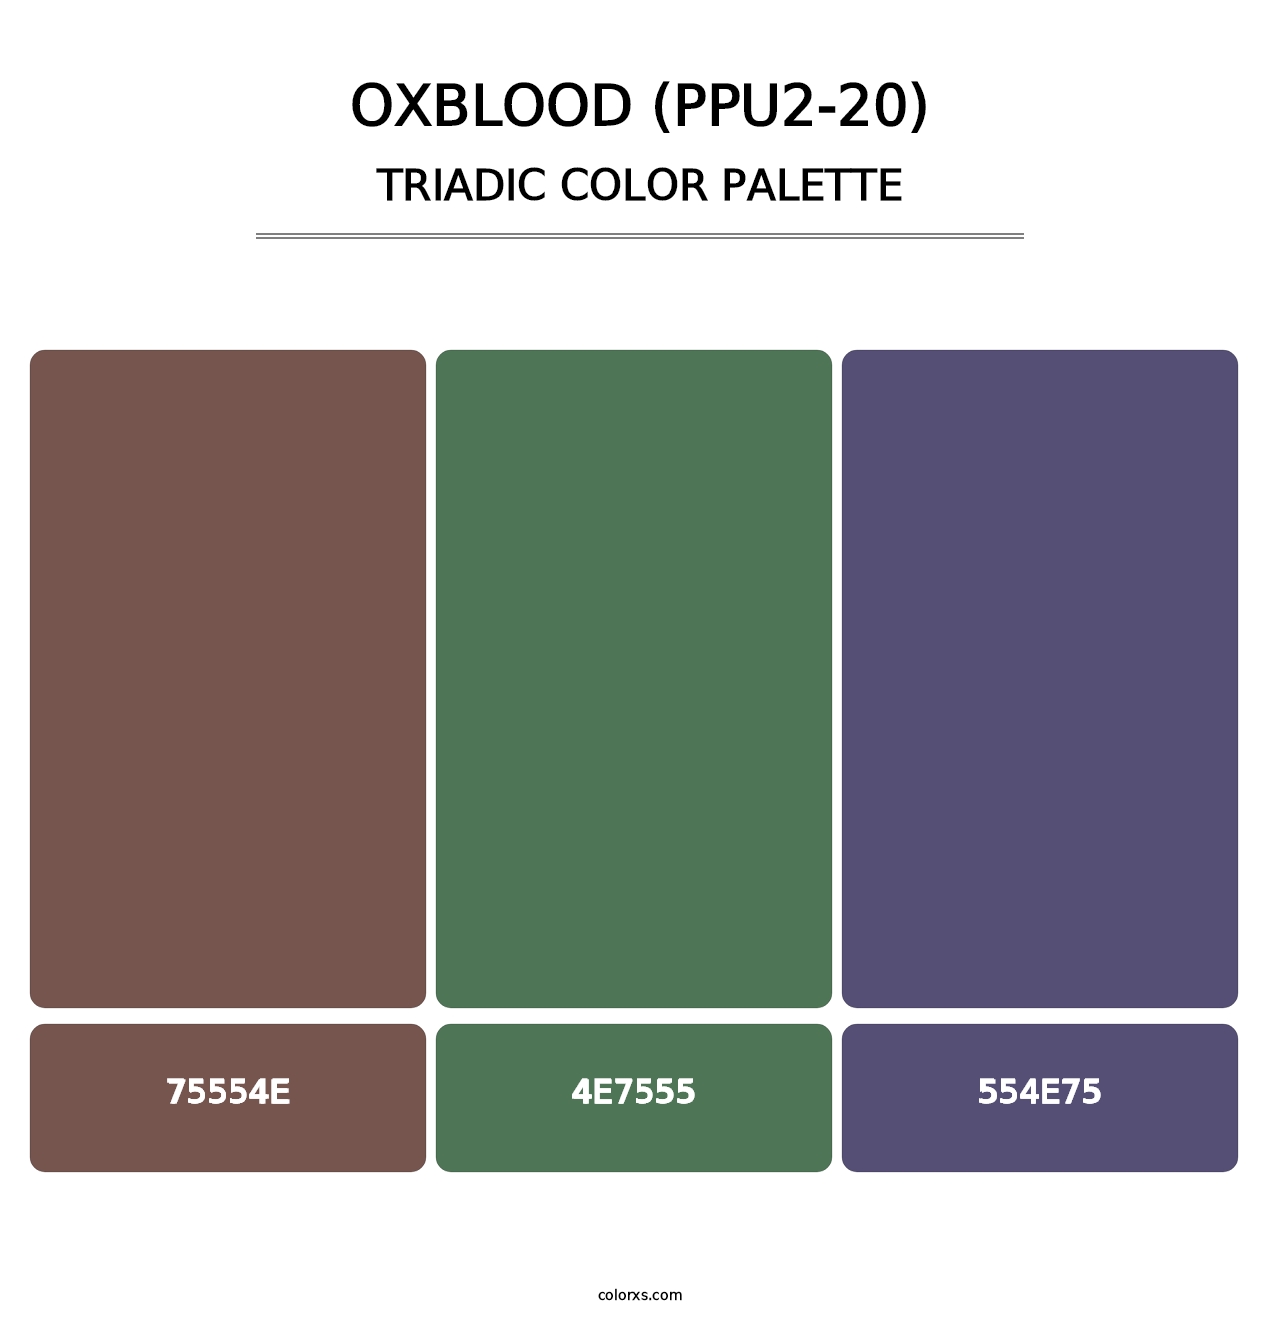 Oxblood (PPU2-20) - Triadic Color Palette